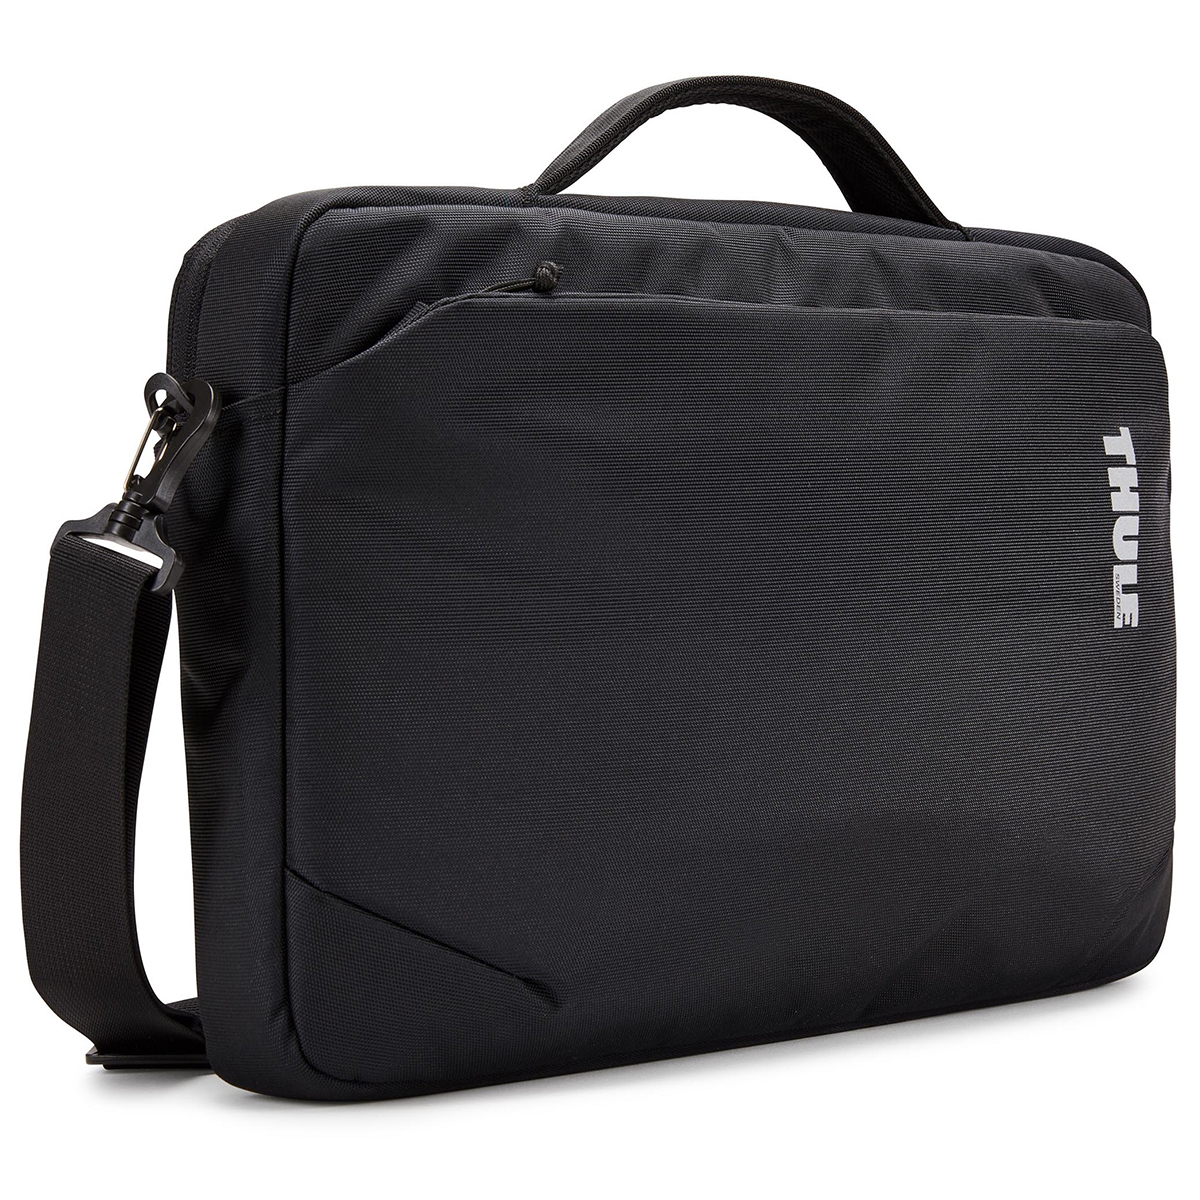 Thule Subterra Macbook 15" Attache Laptop Bag